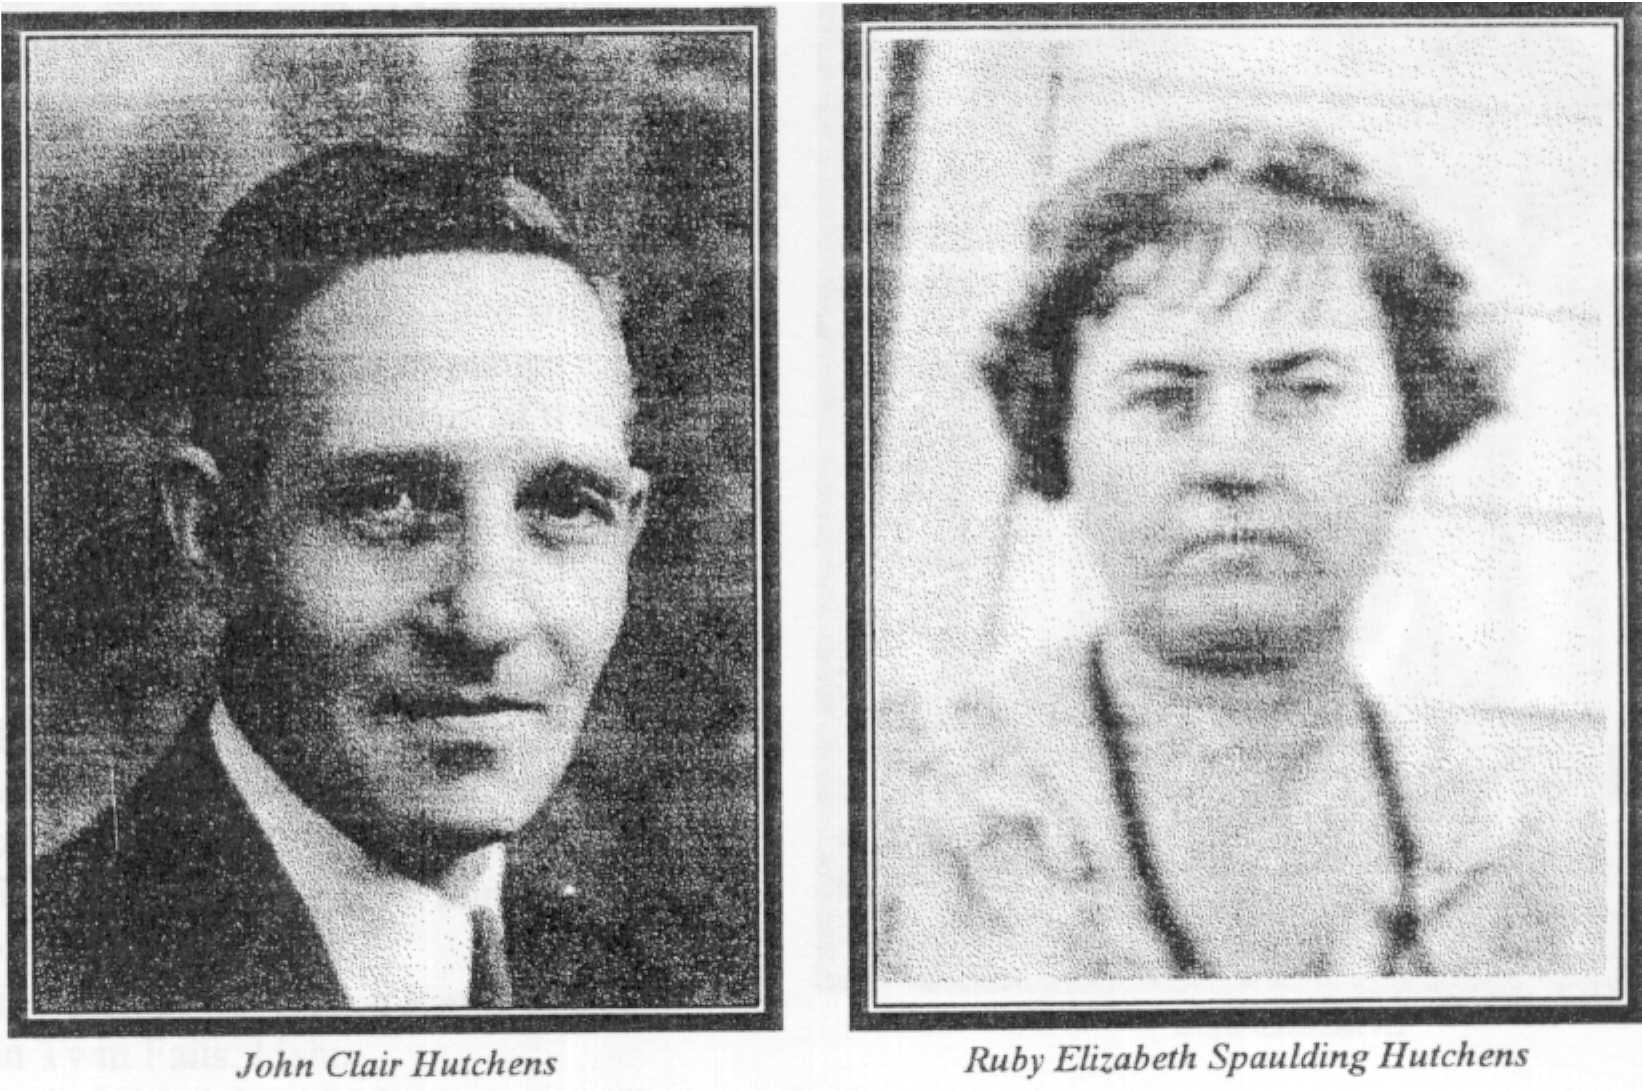 John Clair Hutchens and Ruby Elizabeth Spaulding Hutchens